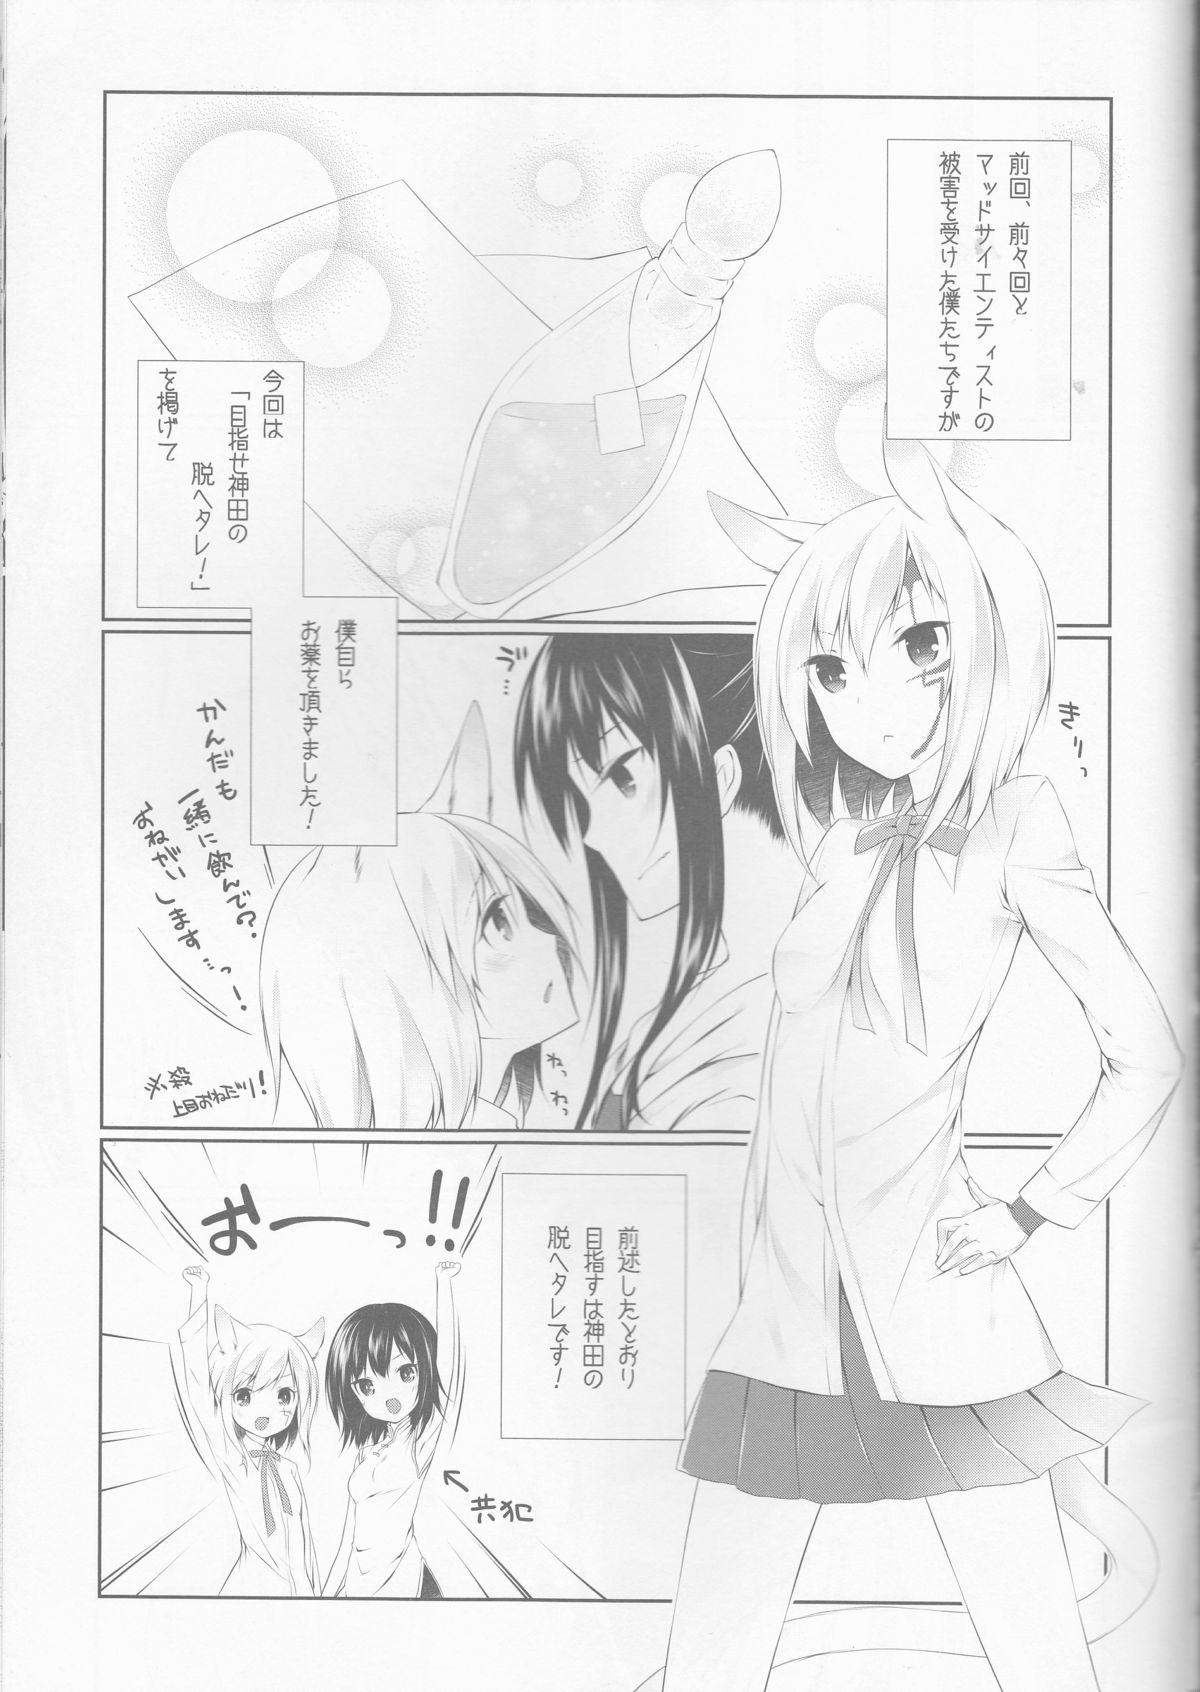 Teenager Yokubari Sweet Angel Betsubara! - D.gray-man Stream - Page 5